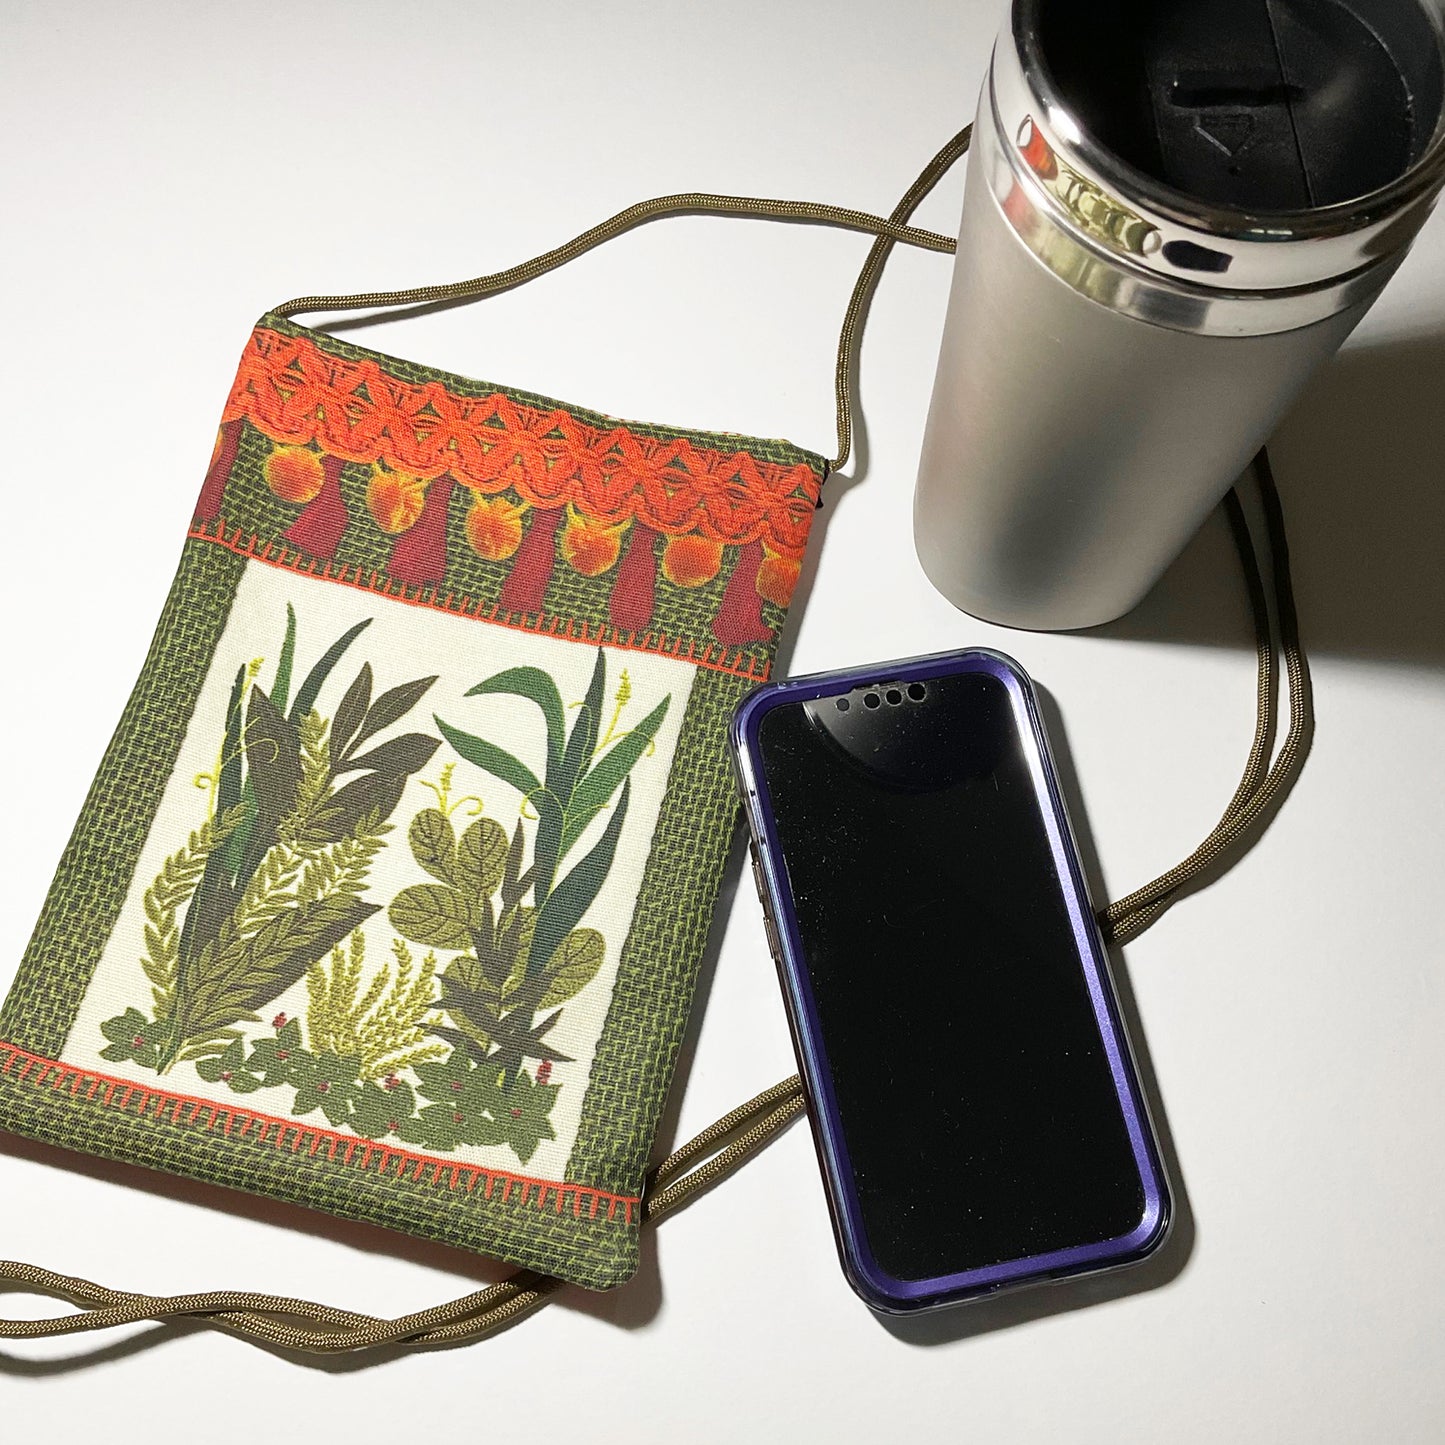 PATTY - Handmade purse with a vintage macrame and plants theme